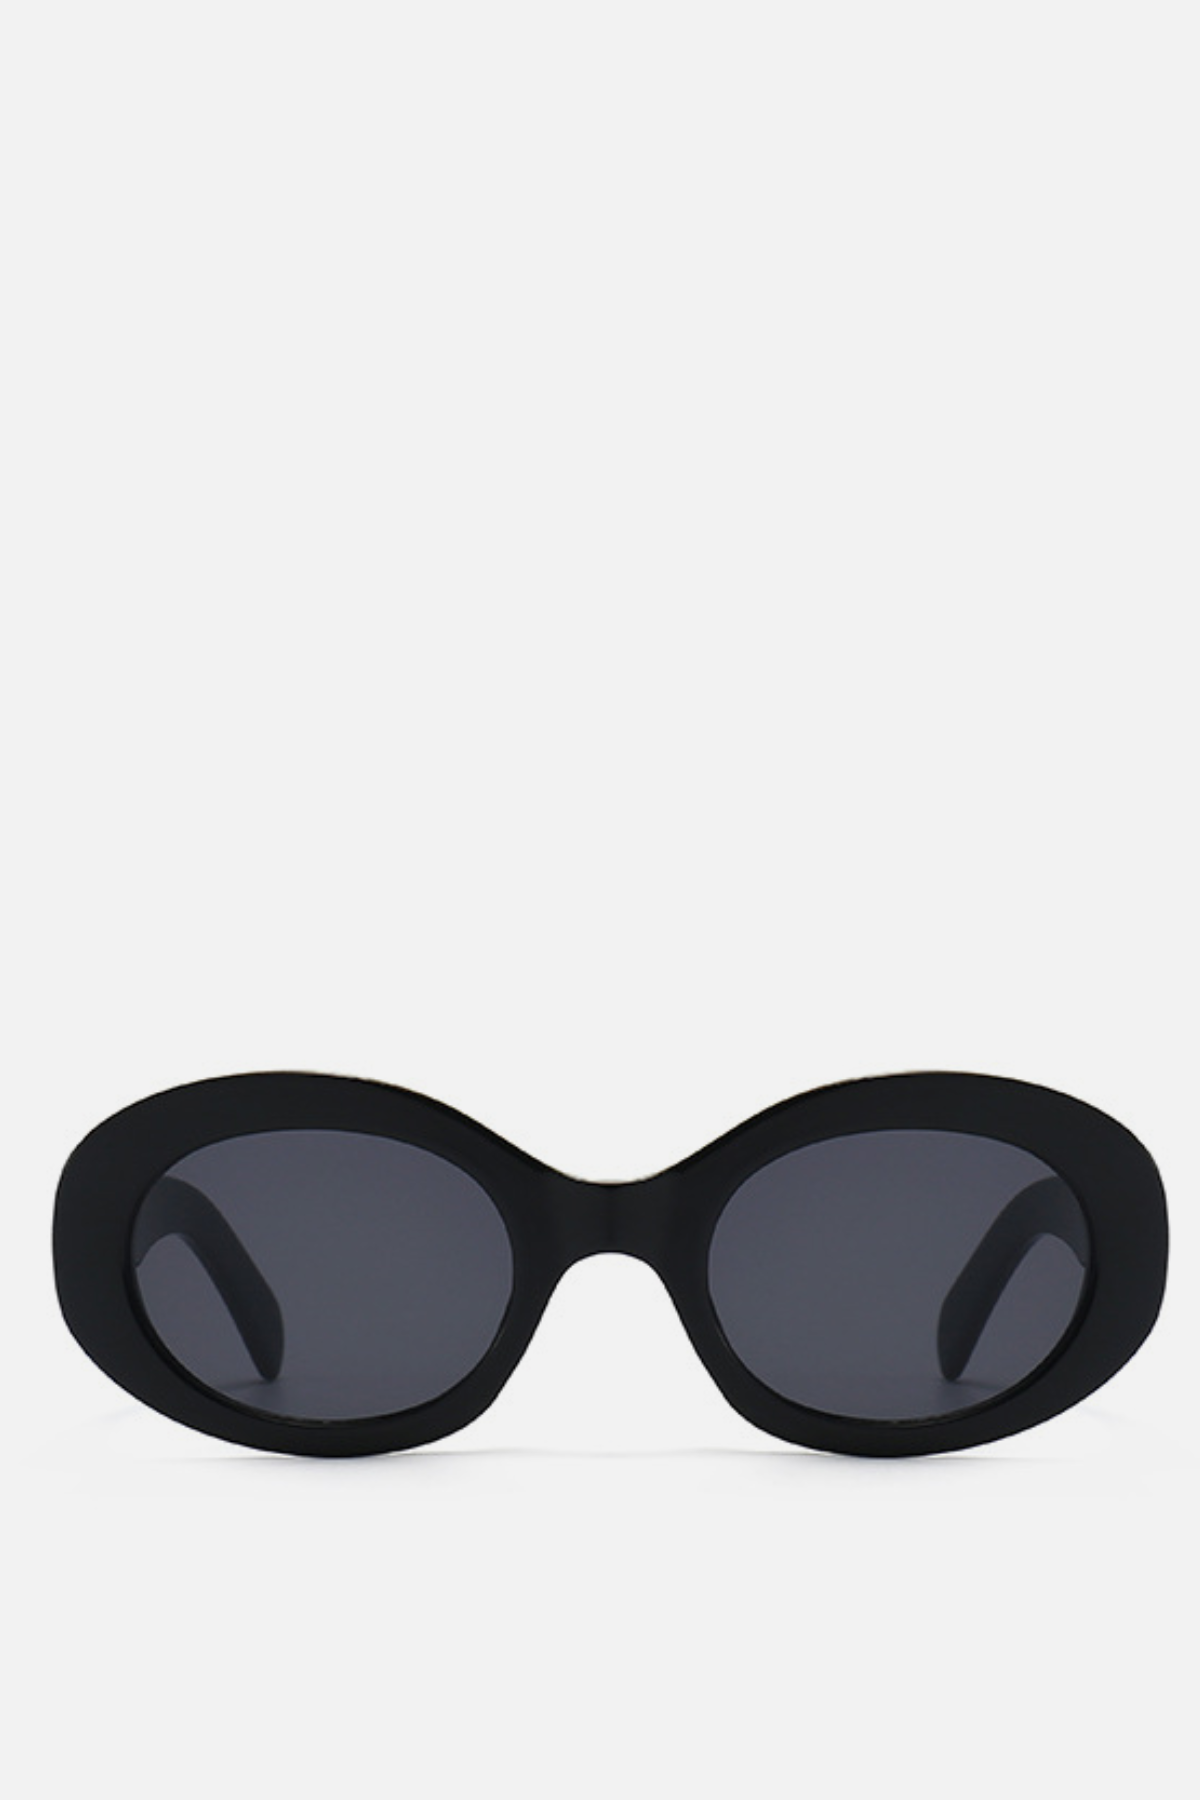 LIMA Black Round Sunglasses